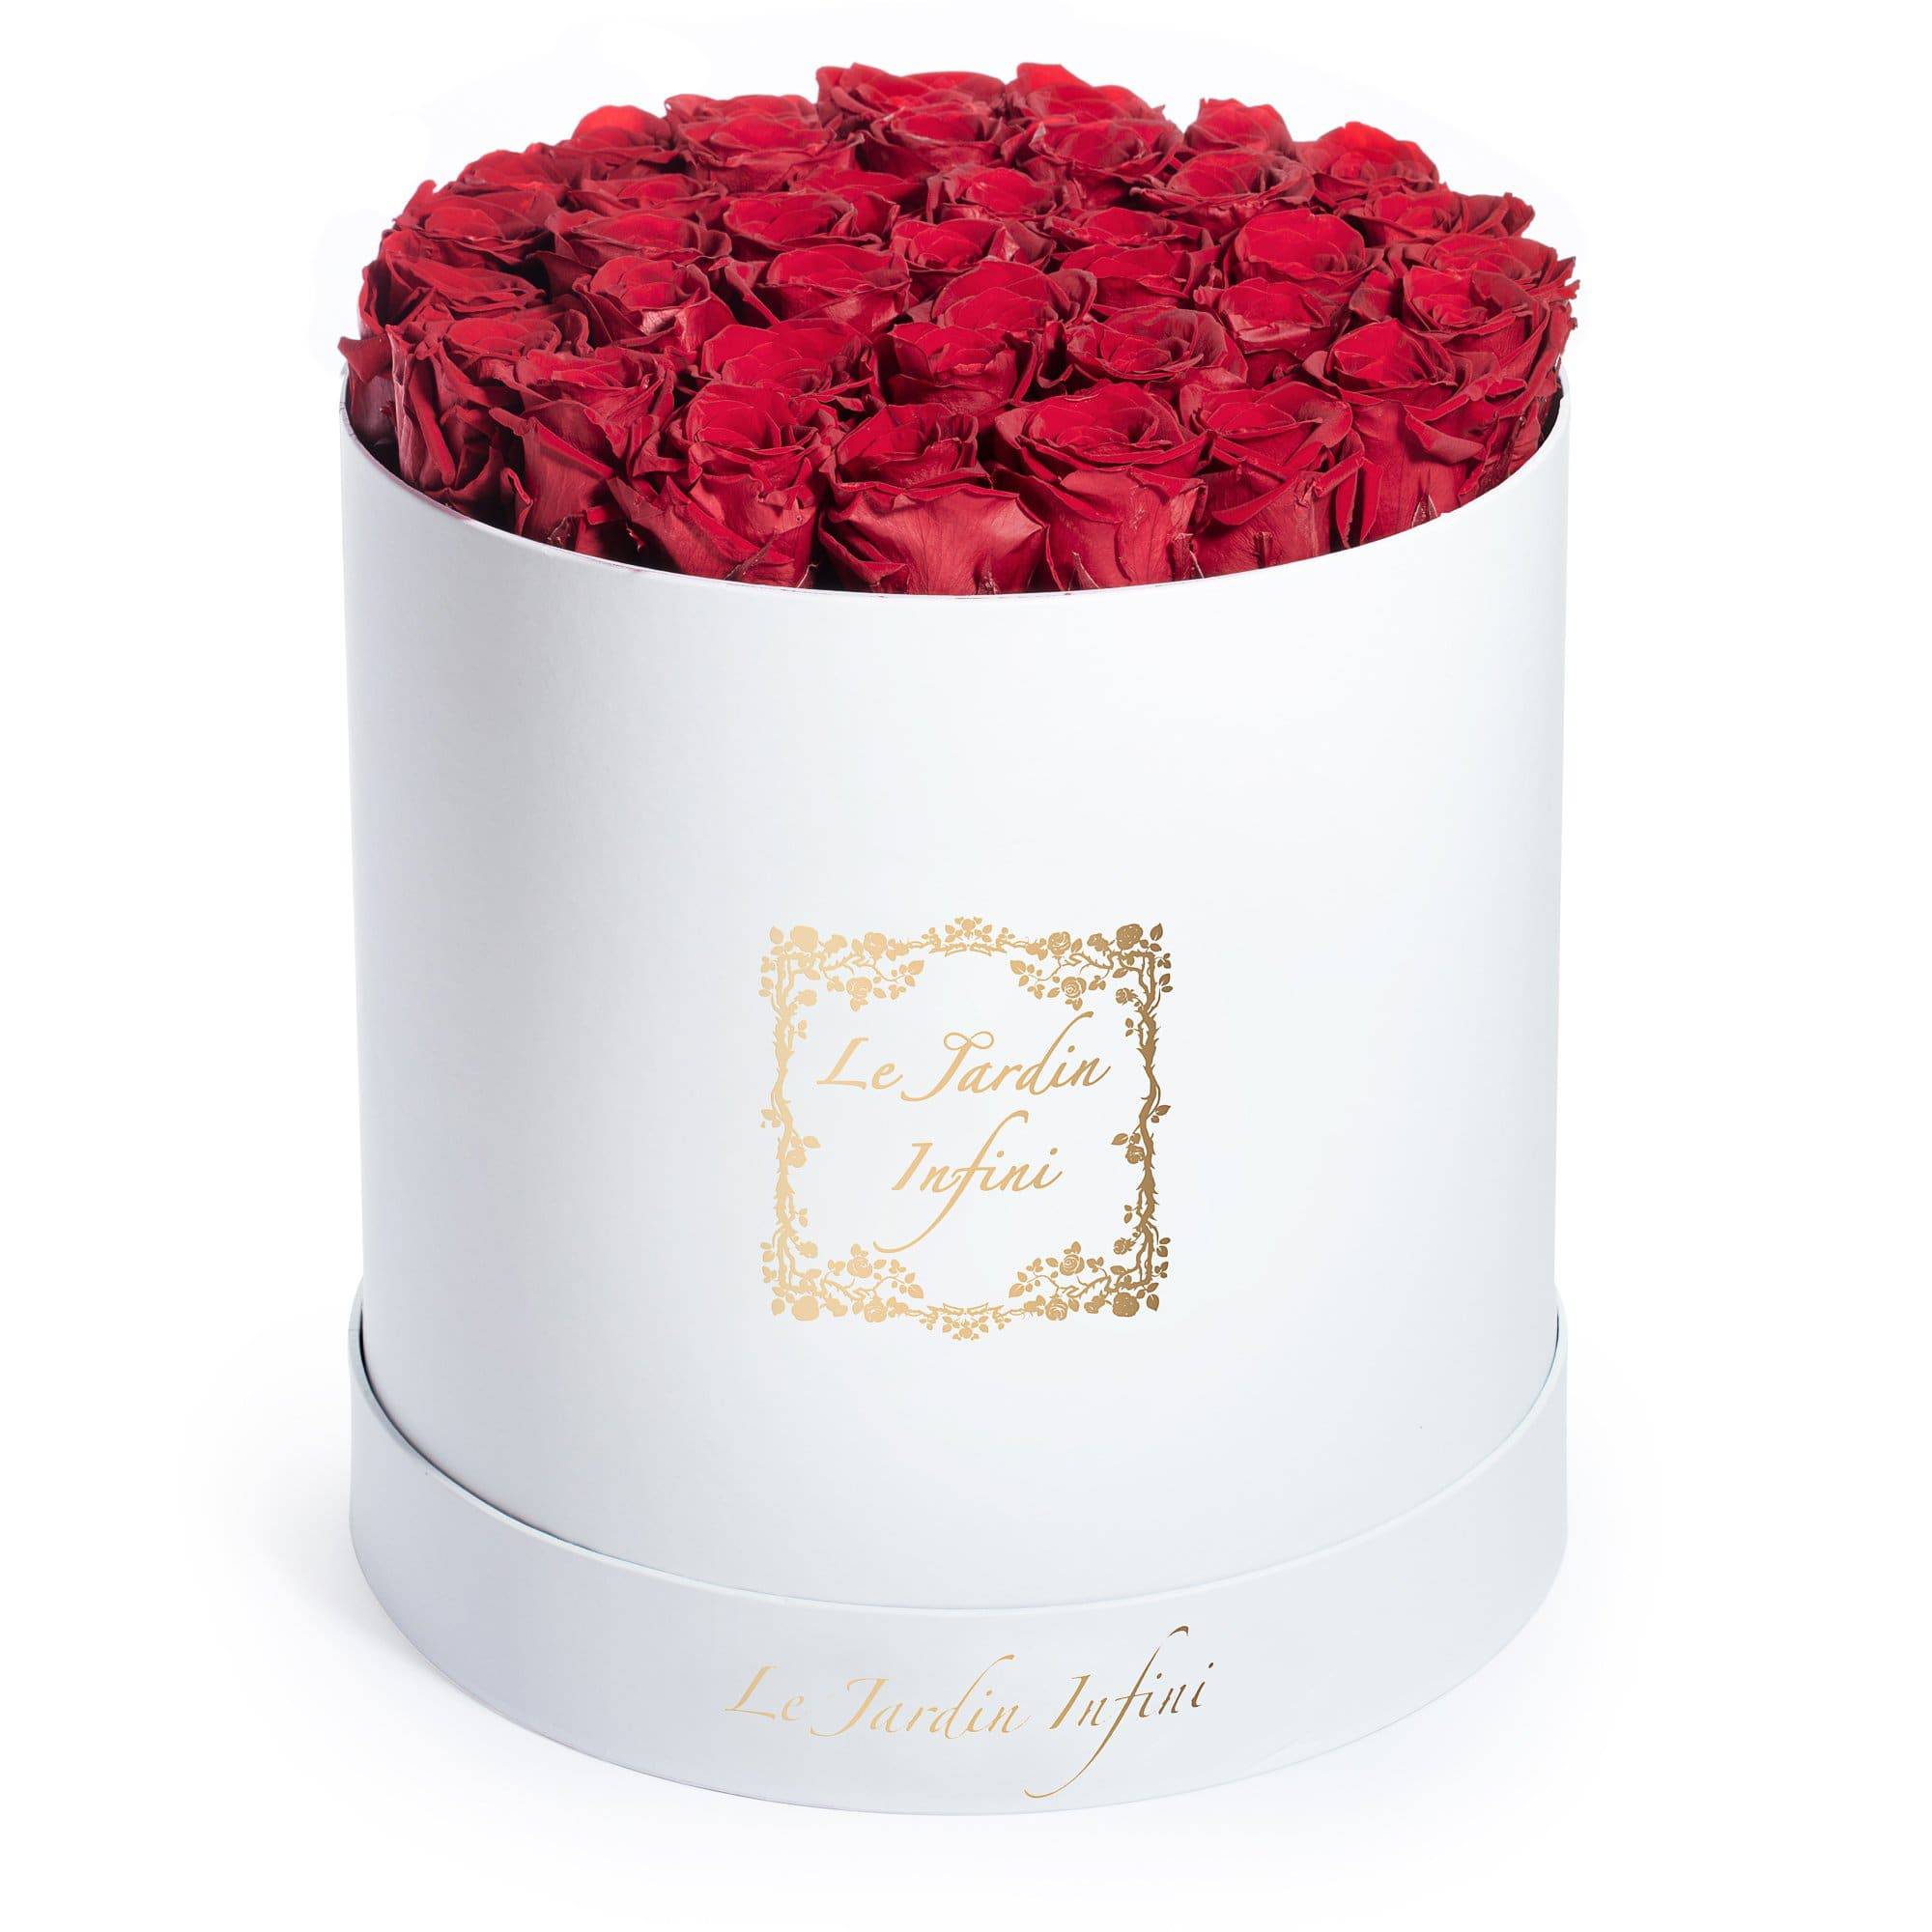 Evil Eye Symbol in Le Petit Round Black Box - Preserved Roses - Venus et  Fleur